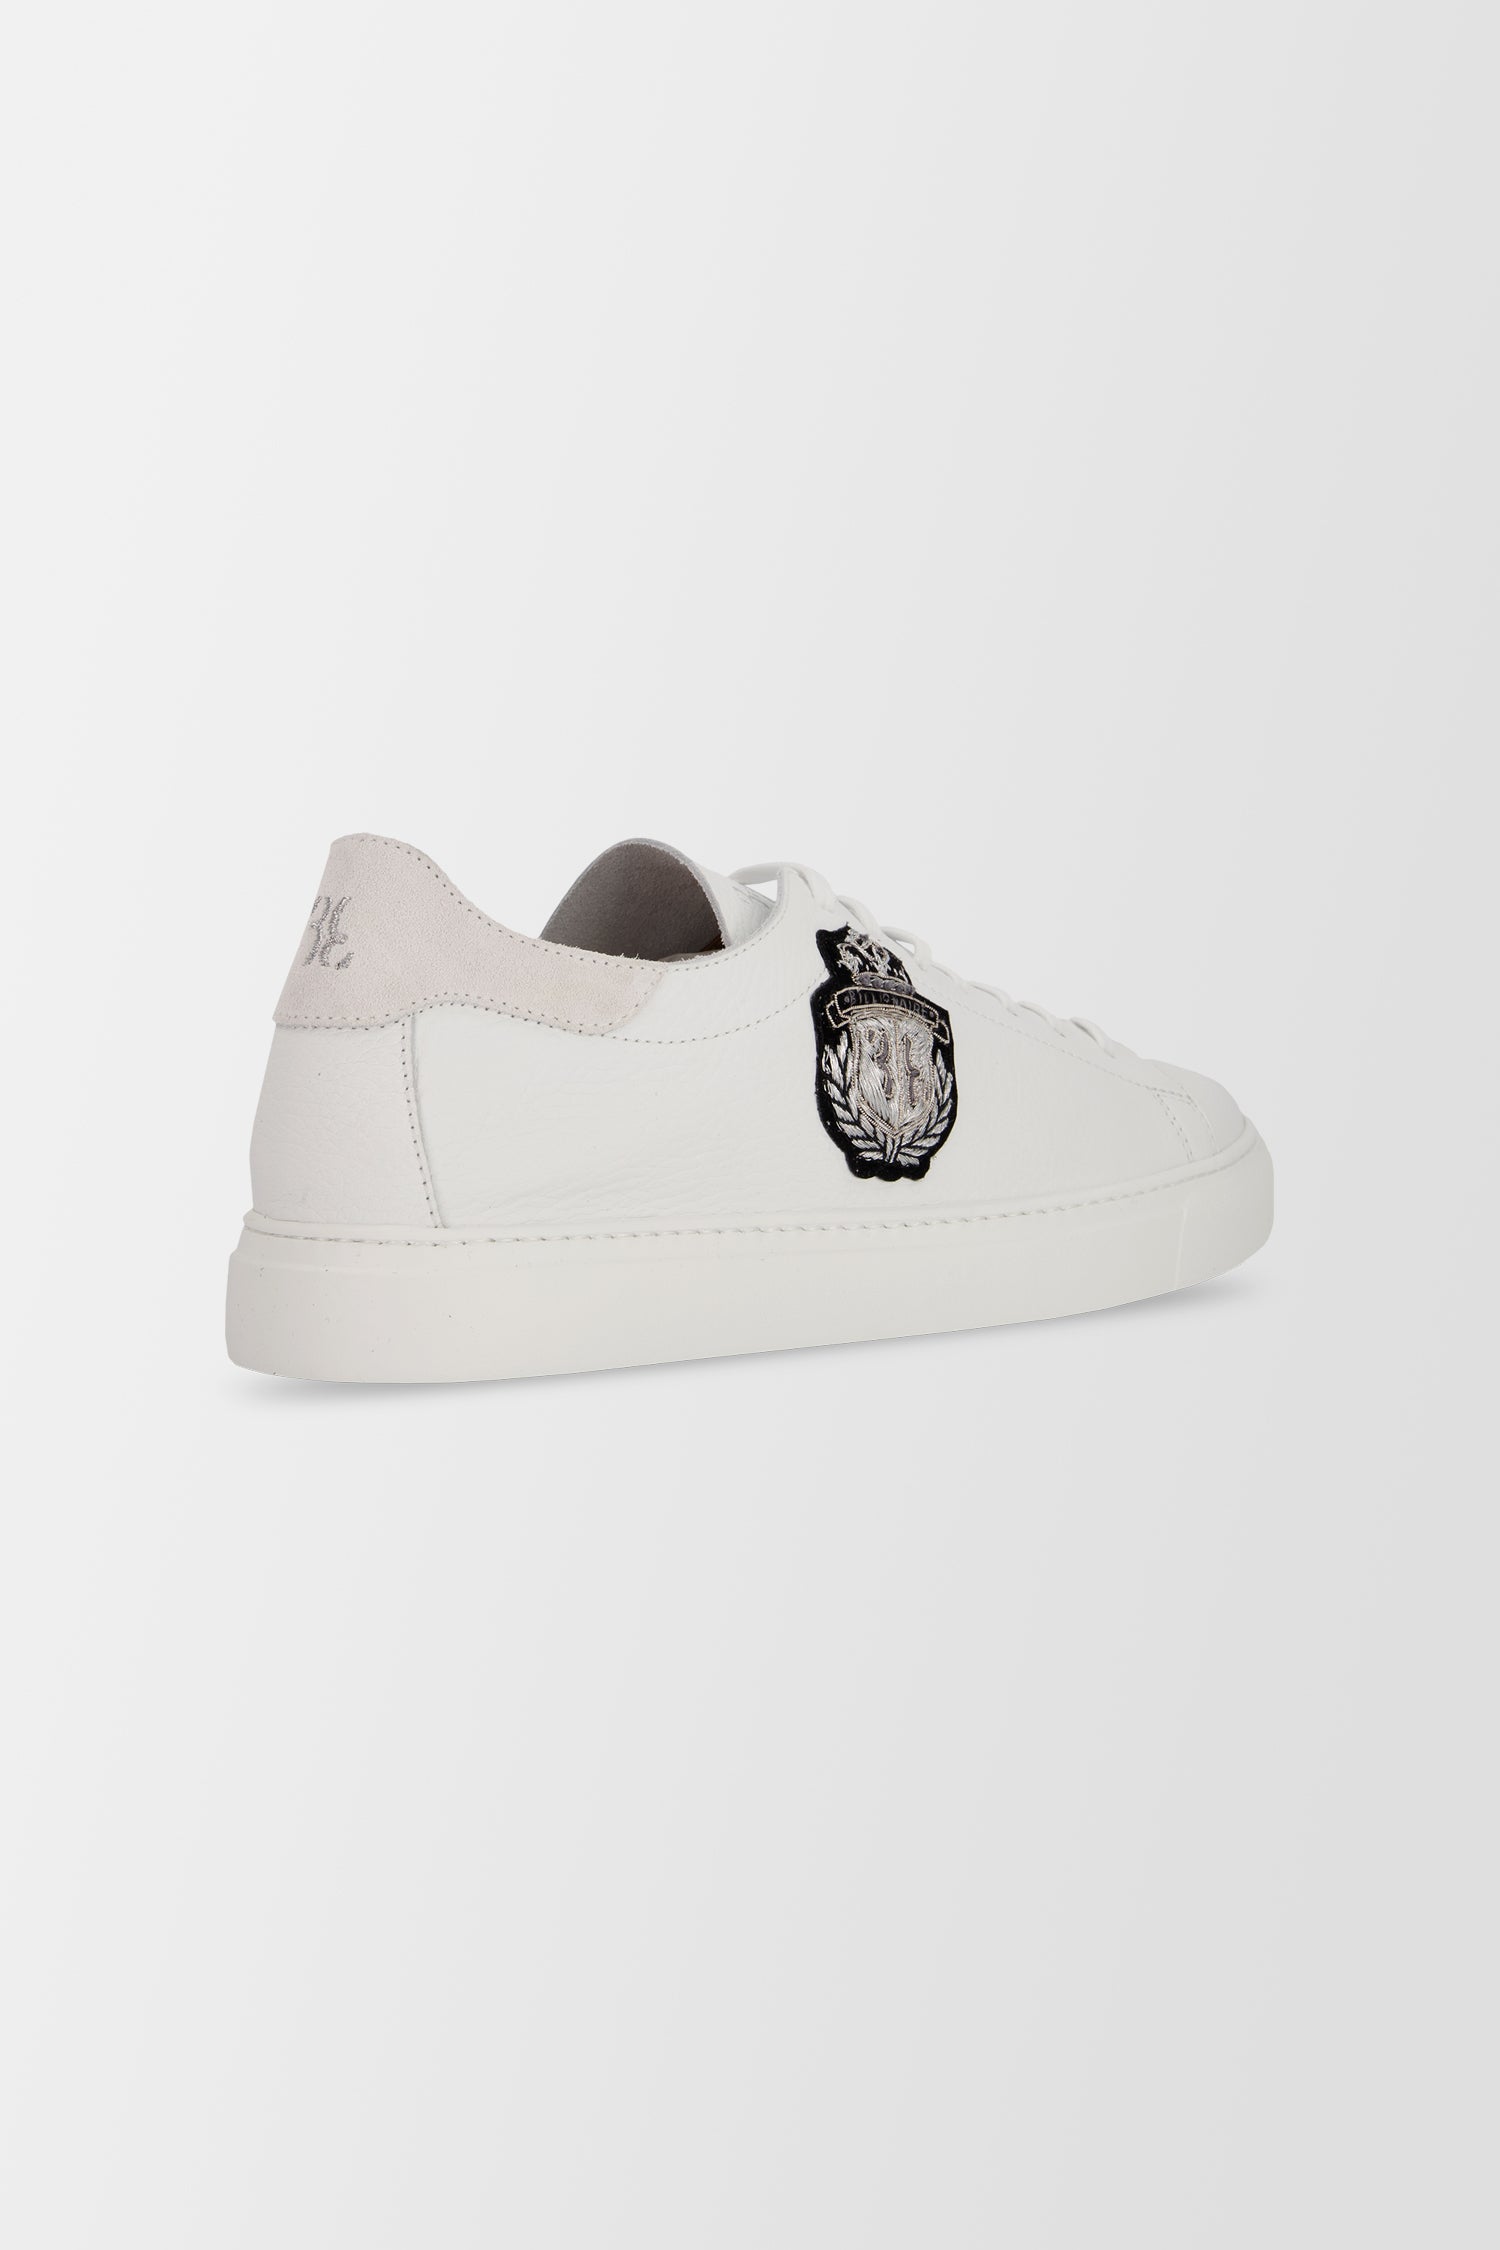 Billionaire Black Crest White Sneakers